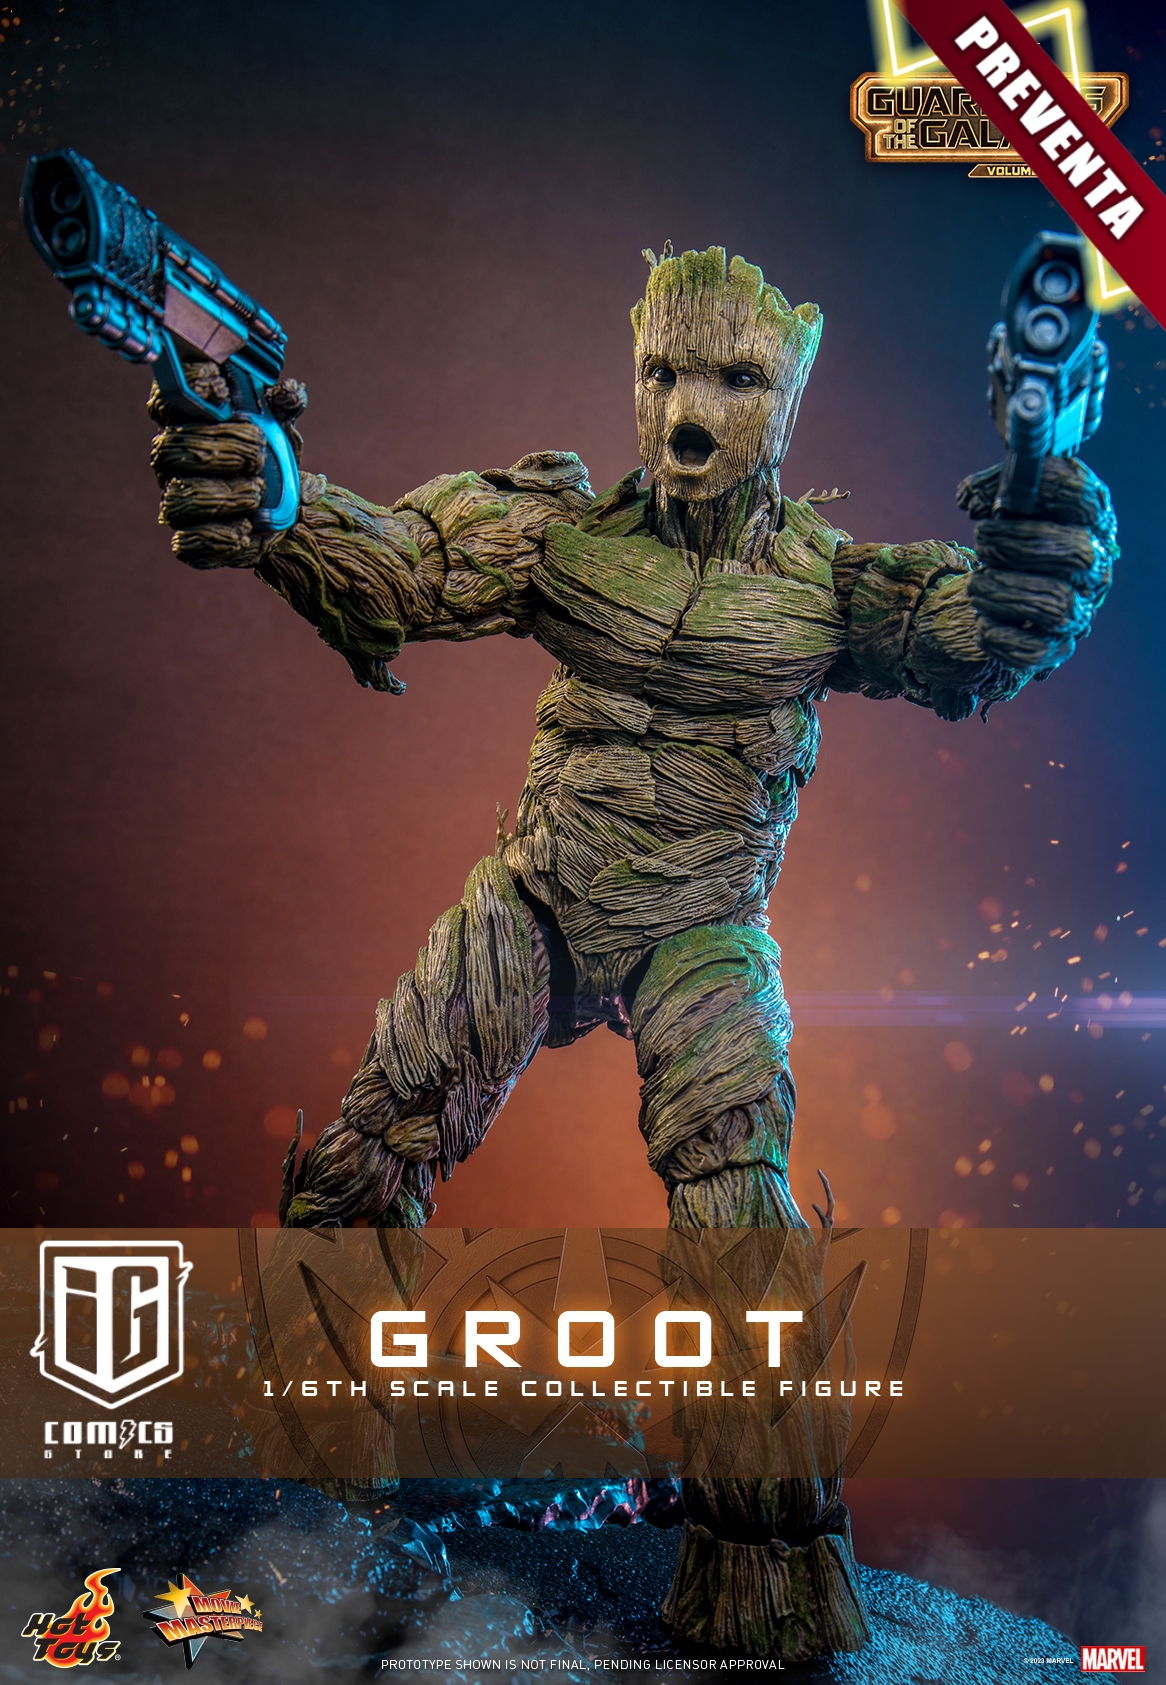 Groot - Guardianes de la Galaxia de Marvel Escala 1:6 por Hot Toys Tooys ::  Coleccionables e Infantiles